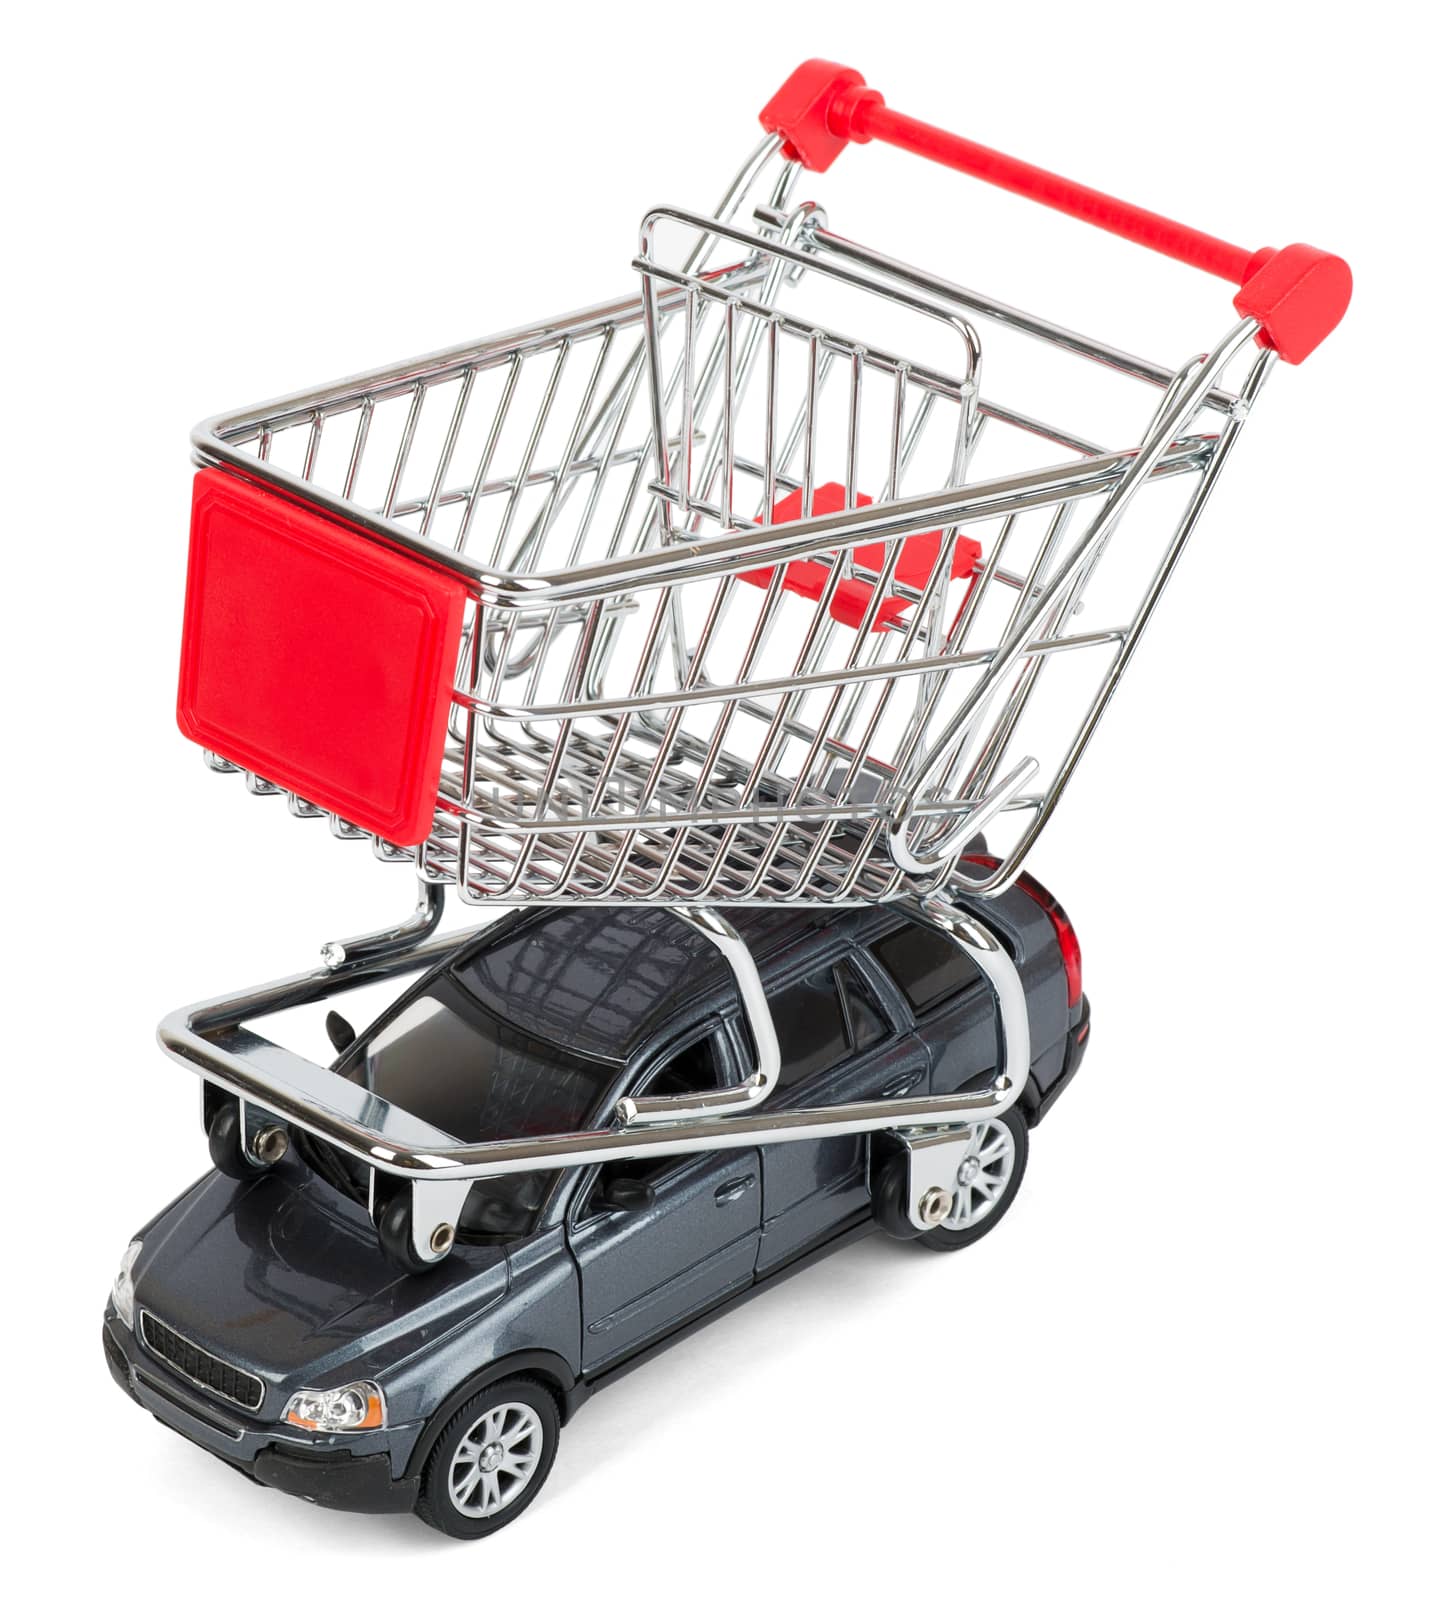 Shopping cart on car isolated on white background